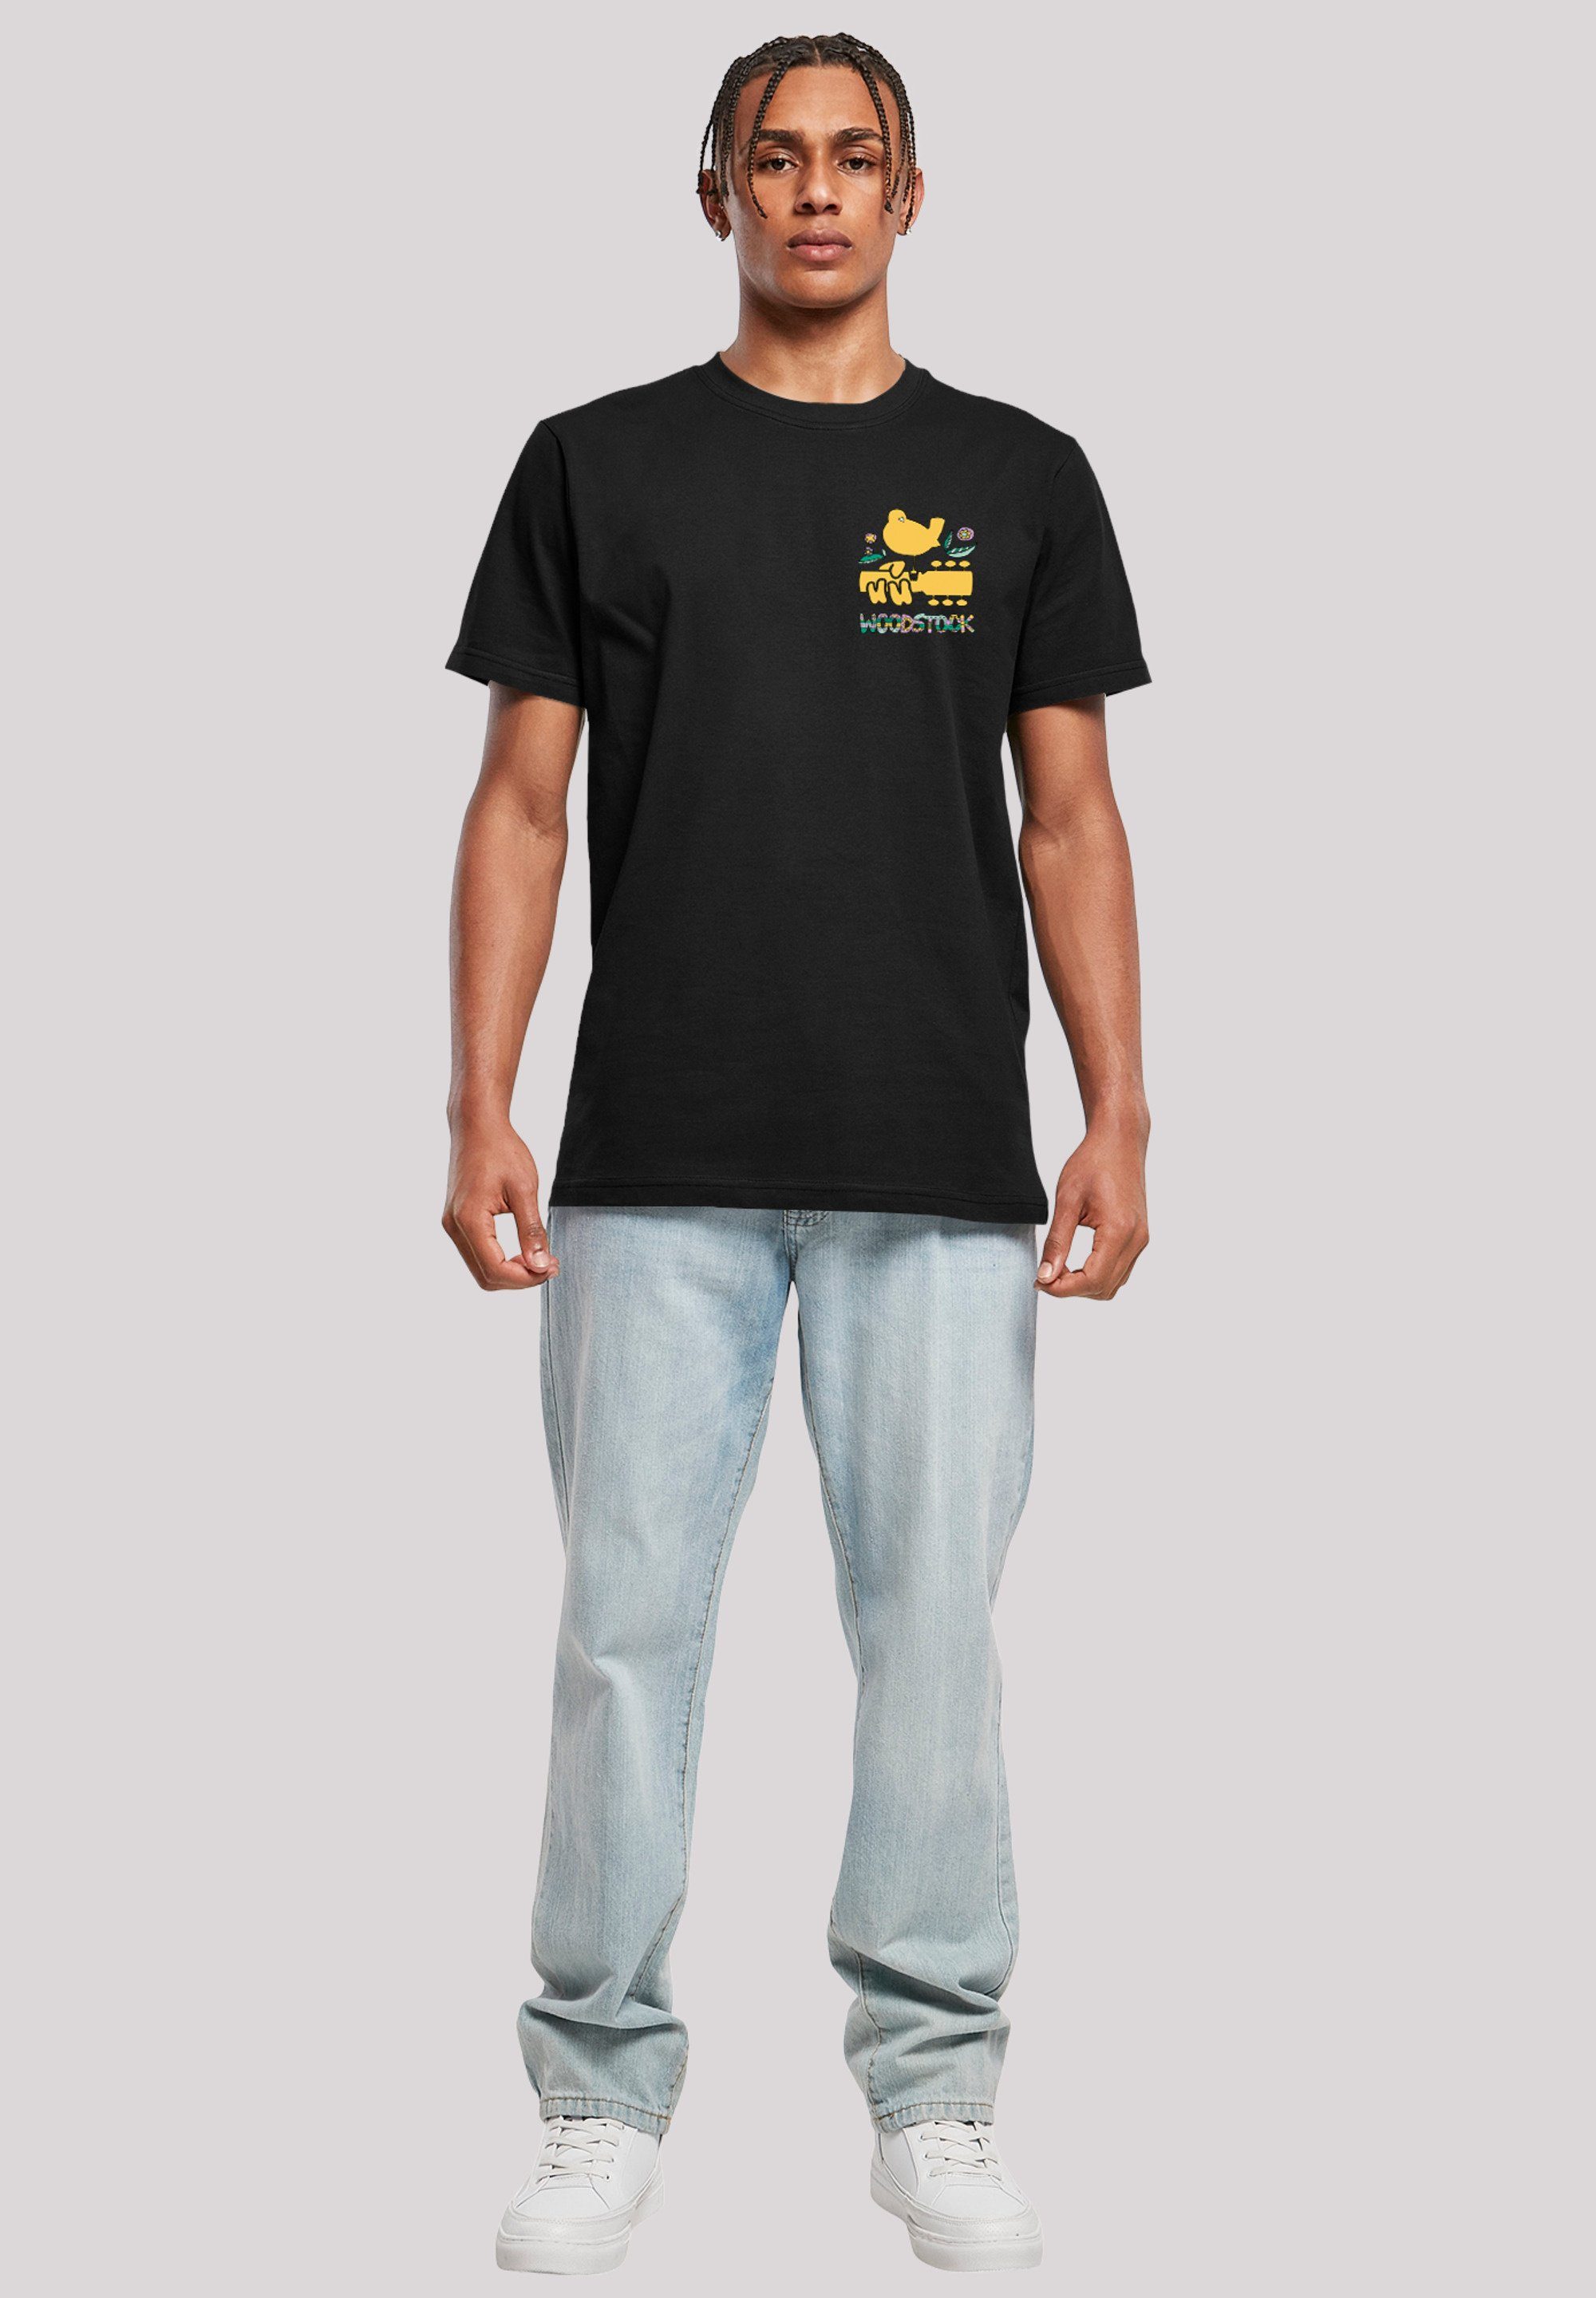 Woodstock Print Logo schwarz Brust T-Shirt F4NT4STIC